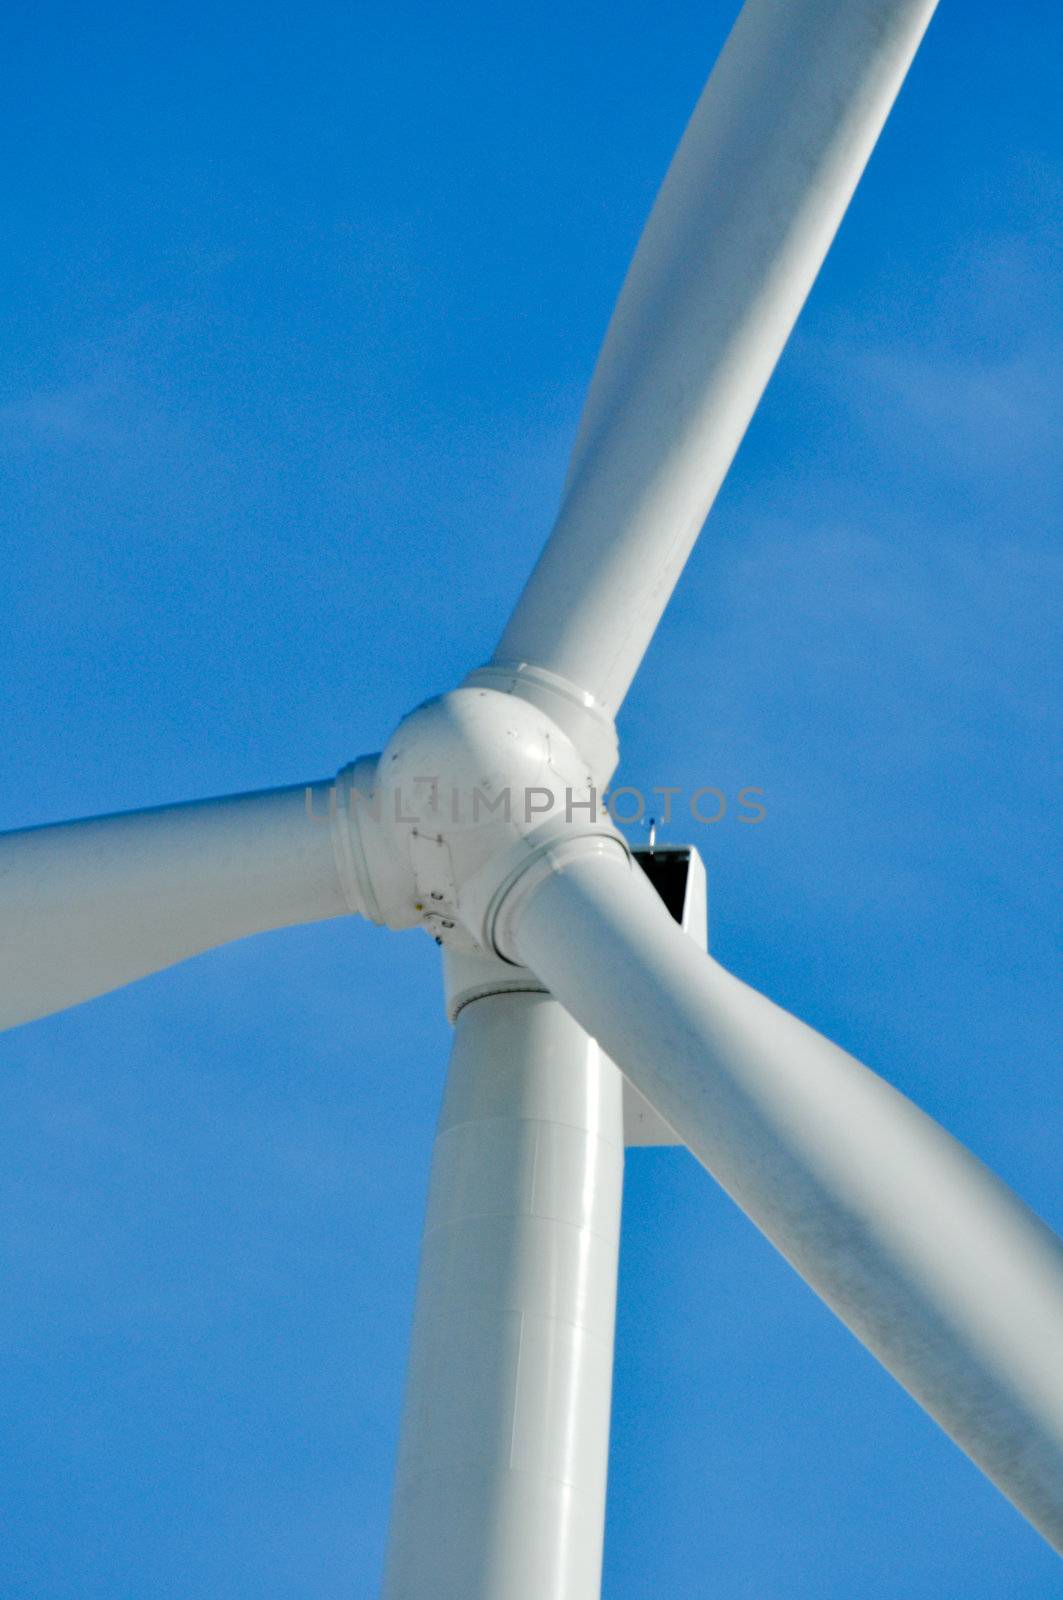 Indiana Wind Turbine in a blue sky by RefocusPhoto